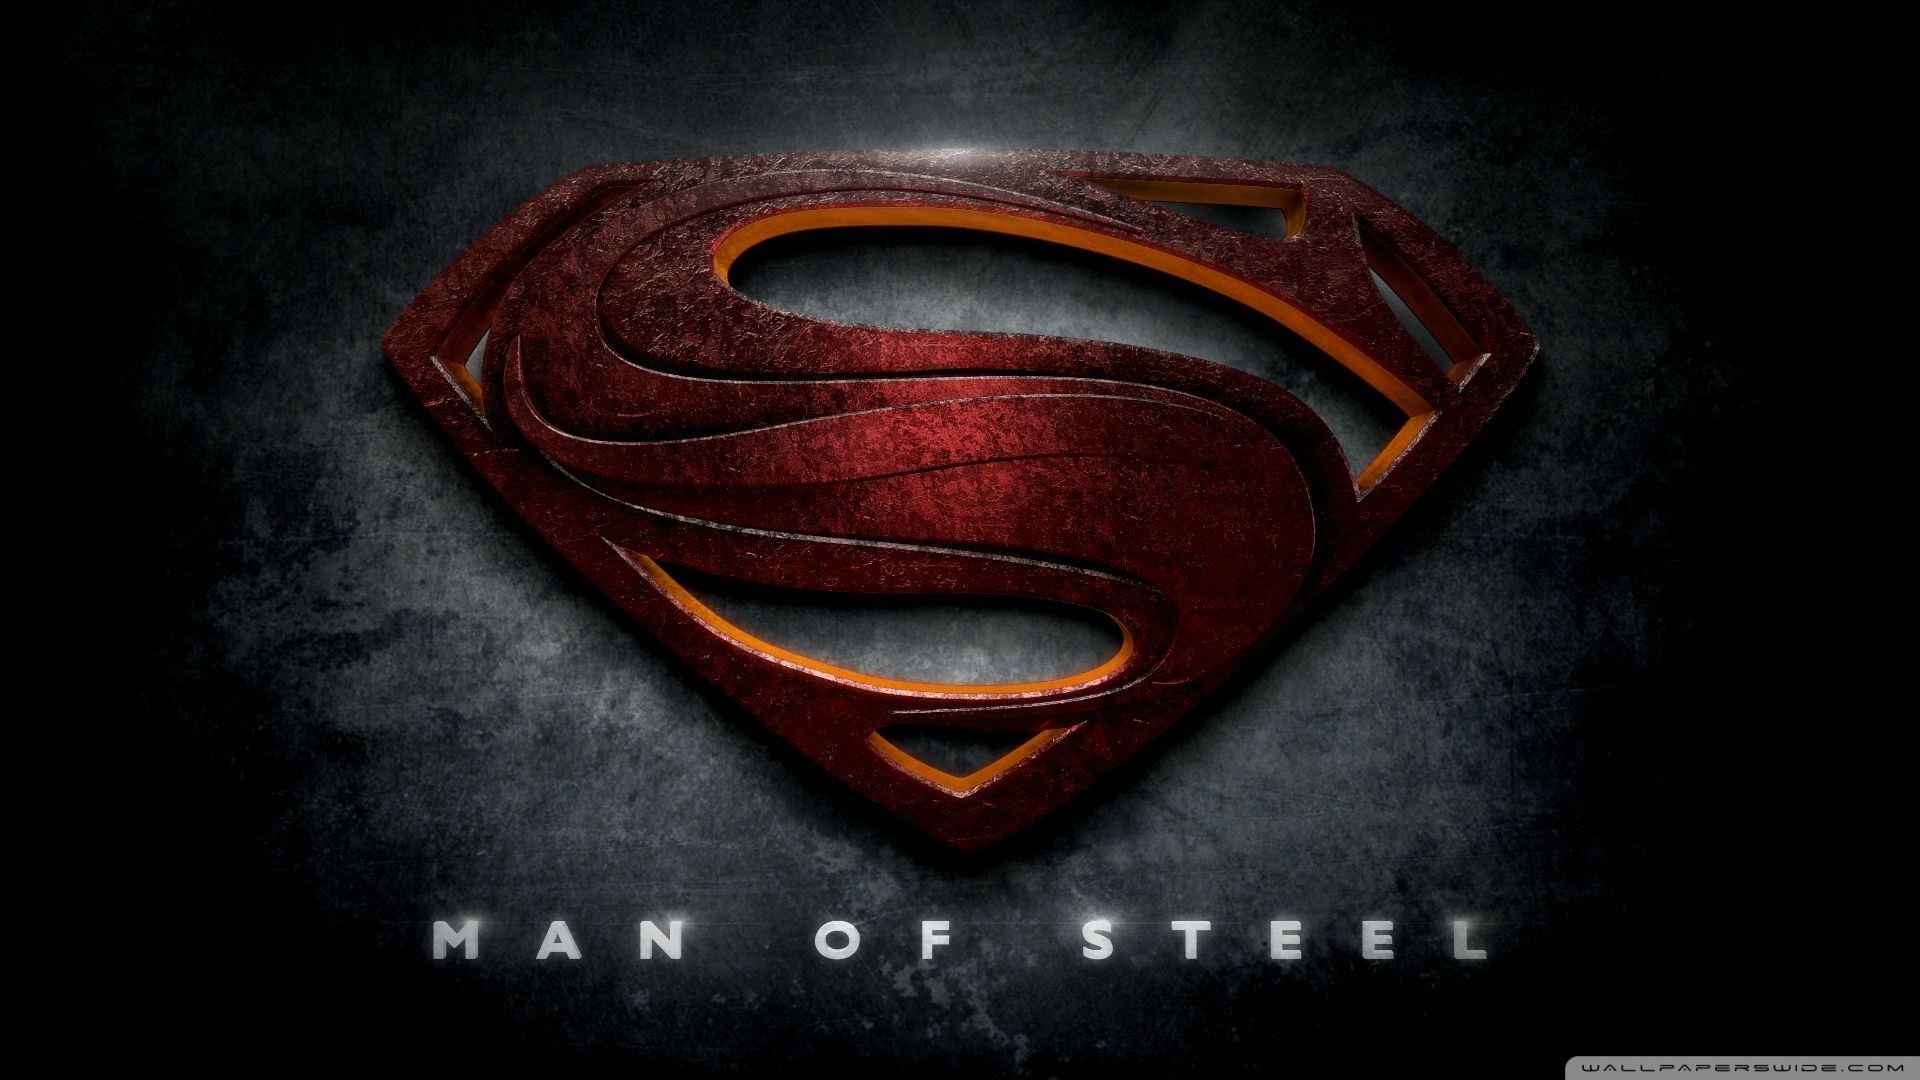 Best 25 Superman hd wallpaper ideas on Pinterest Superman logo, Superman logo wallpaper and Superman logo art